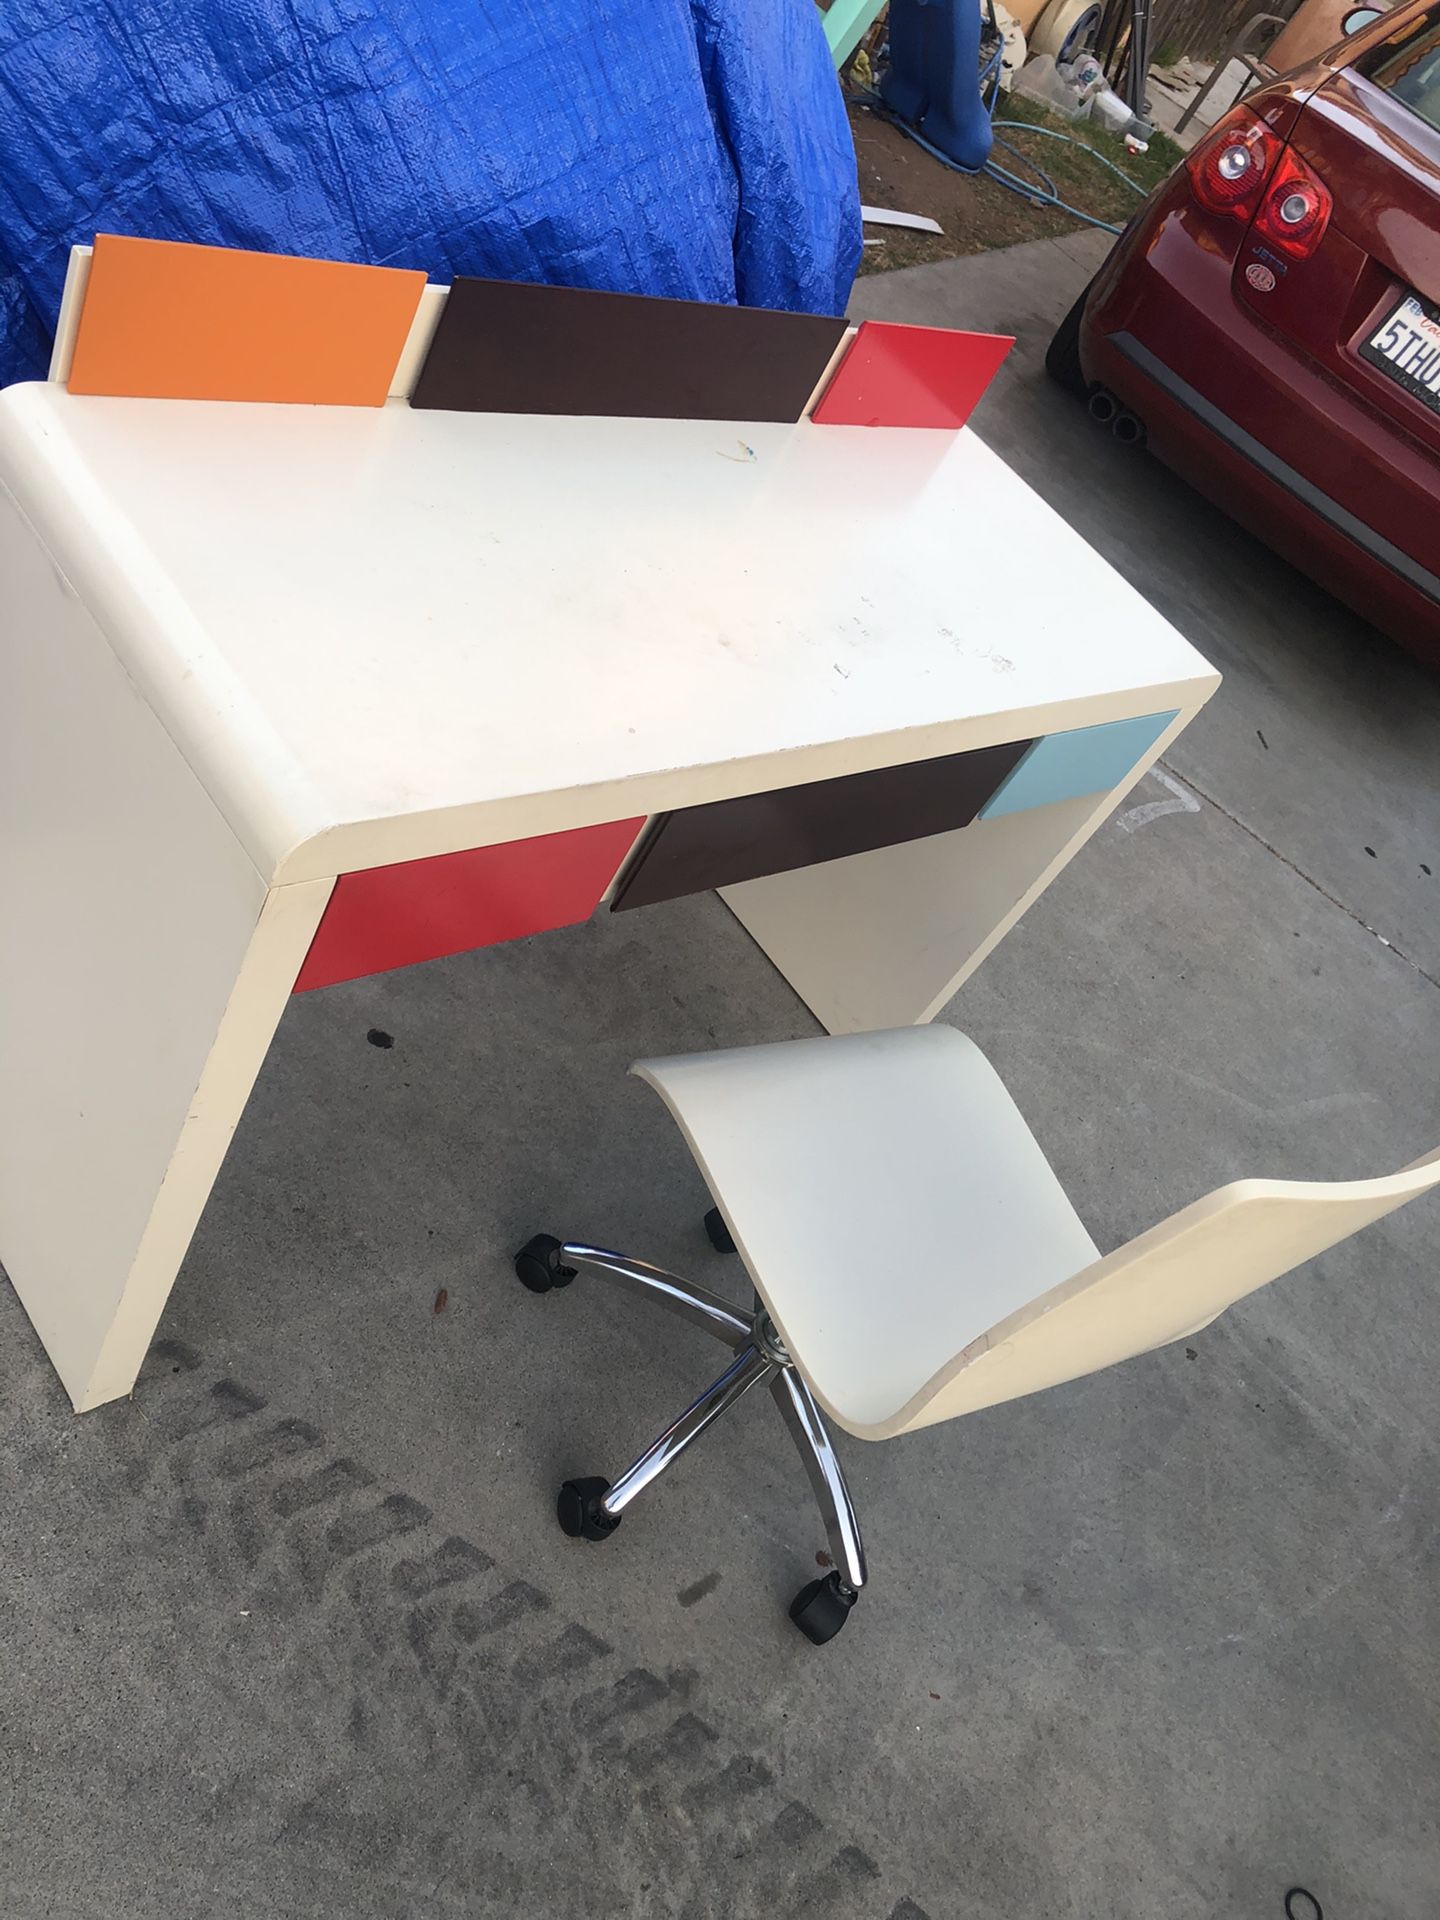 Kids desk and monkey chair 48”x 30” x 18”